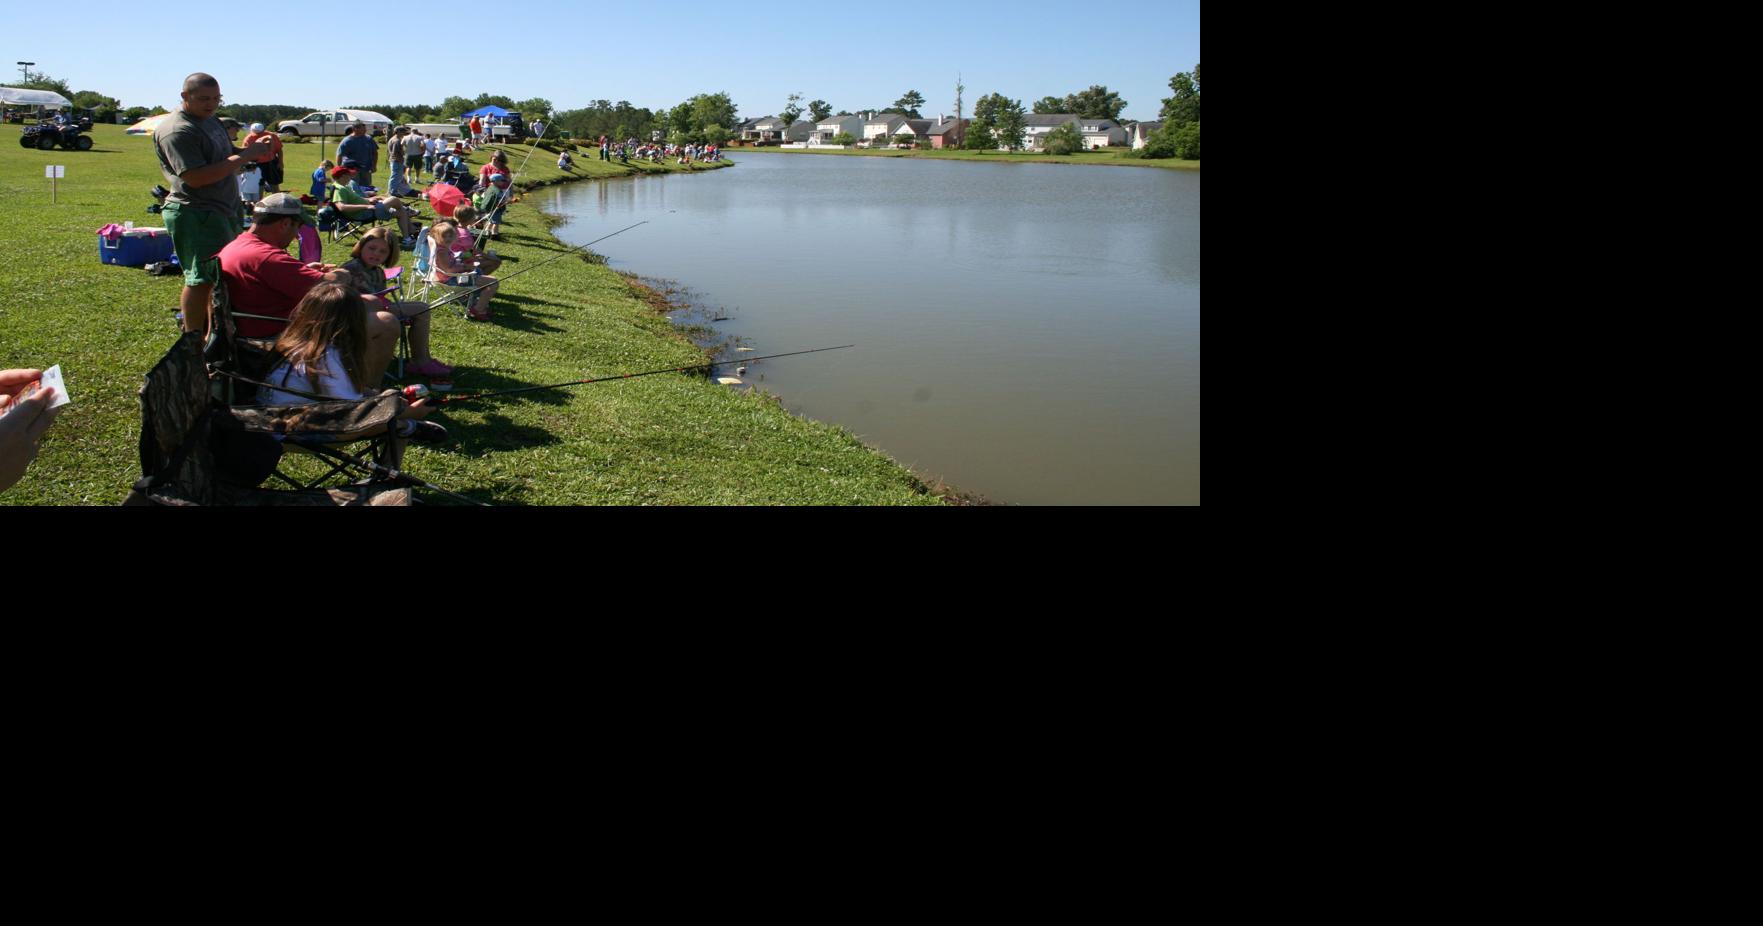 South Carolina fishing rodeos for kids begin next weekend, Fishing